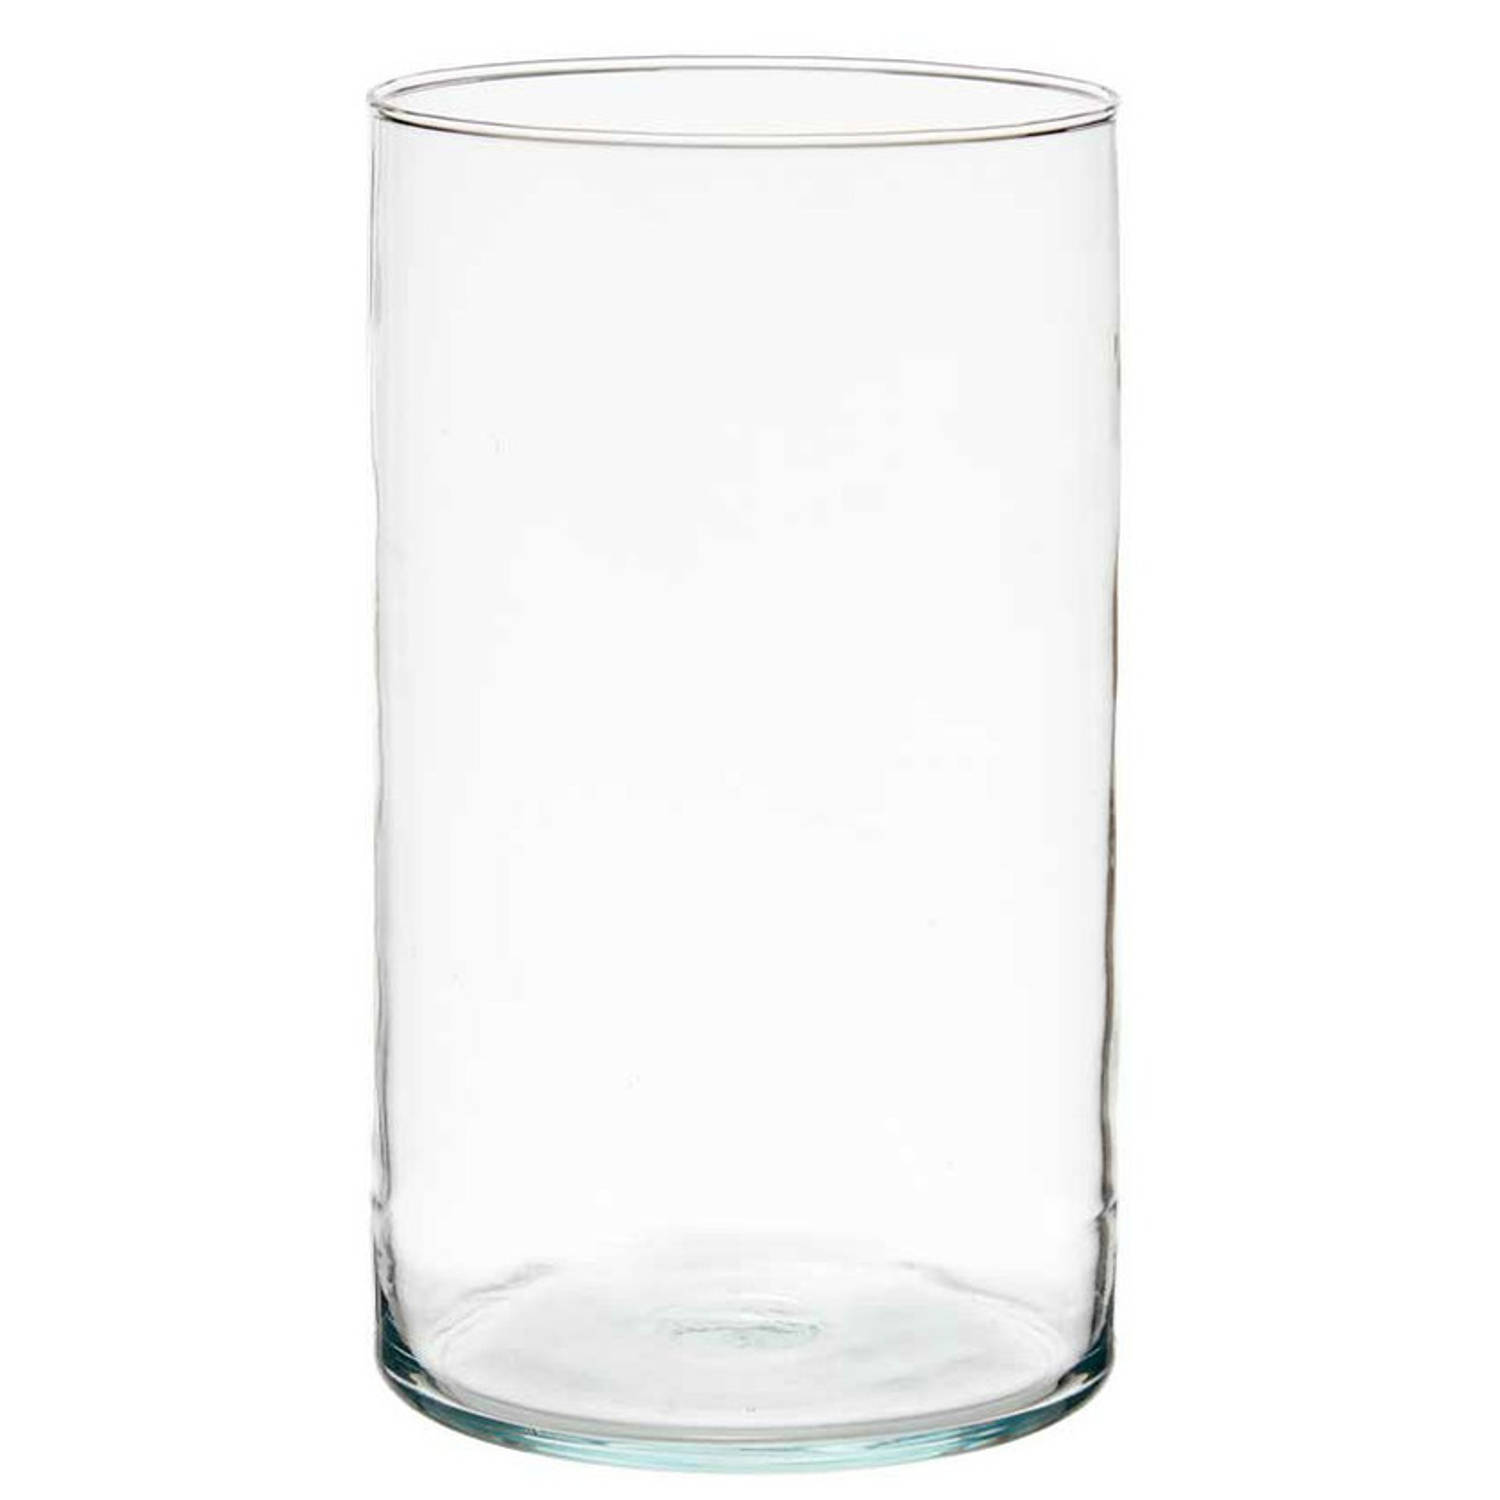 Giftdecor - Bloemenvaas - cilinder vorm - transparant glas - 17 x 30 cm